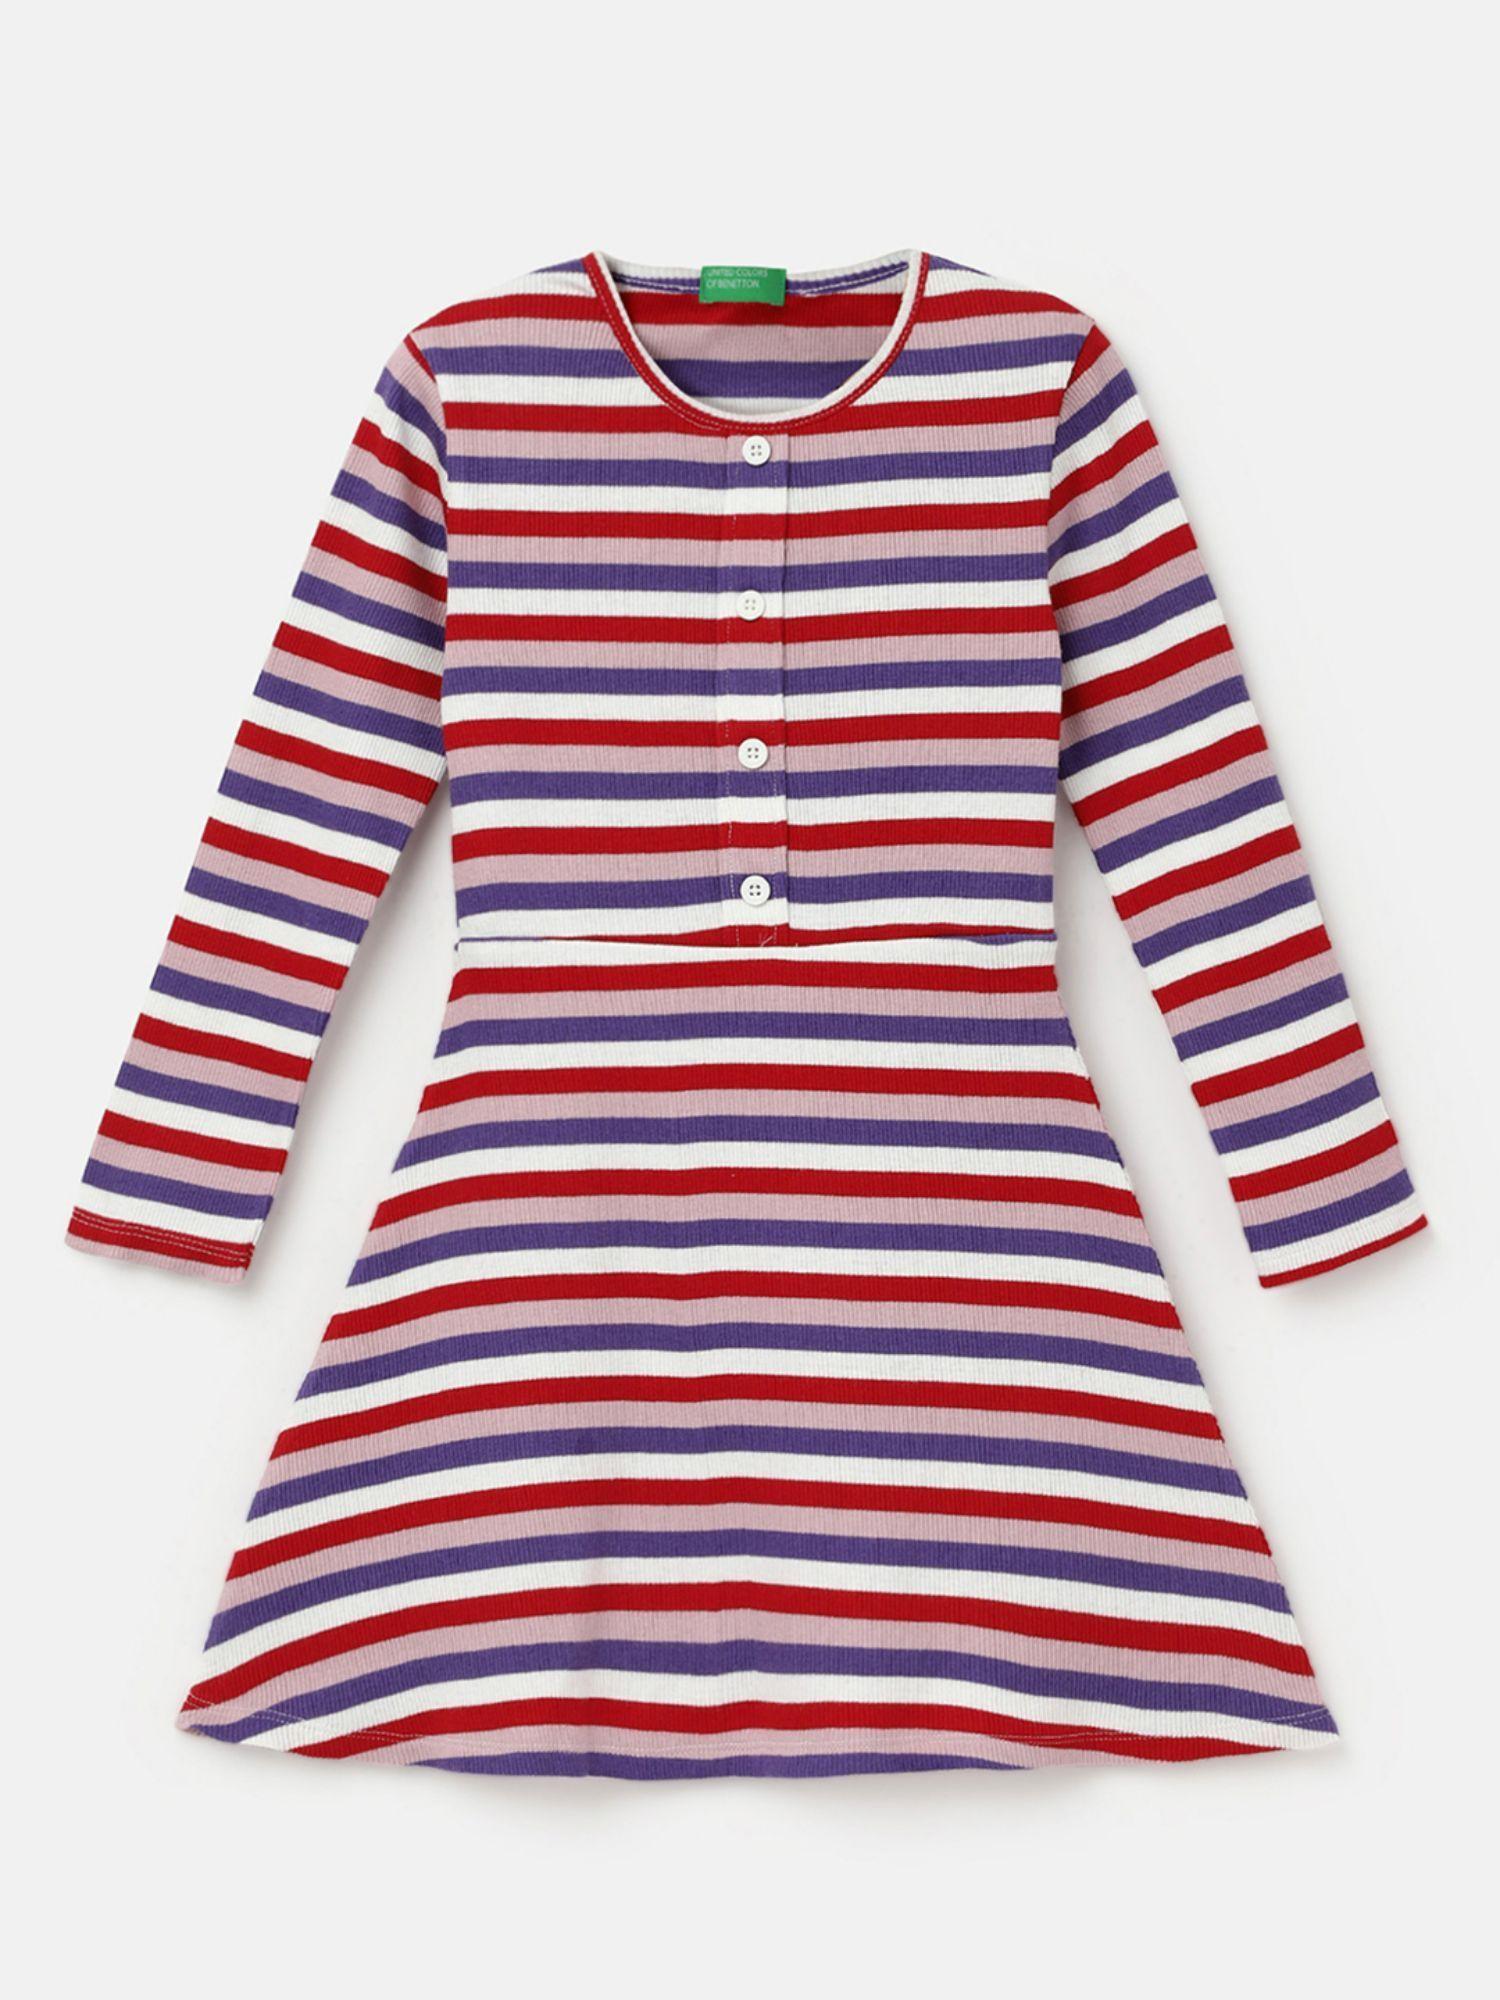 regular-round-neck-striped-dresses